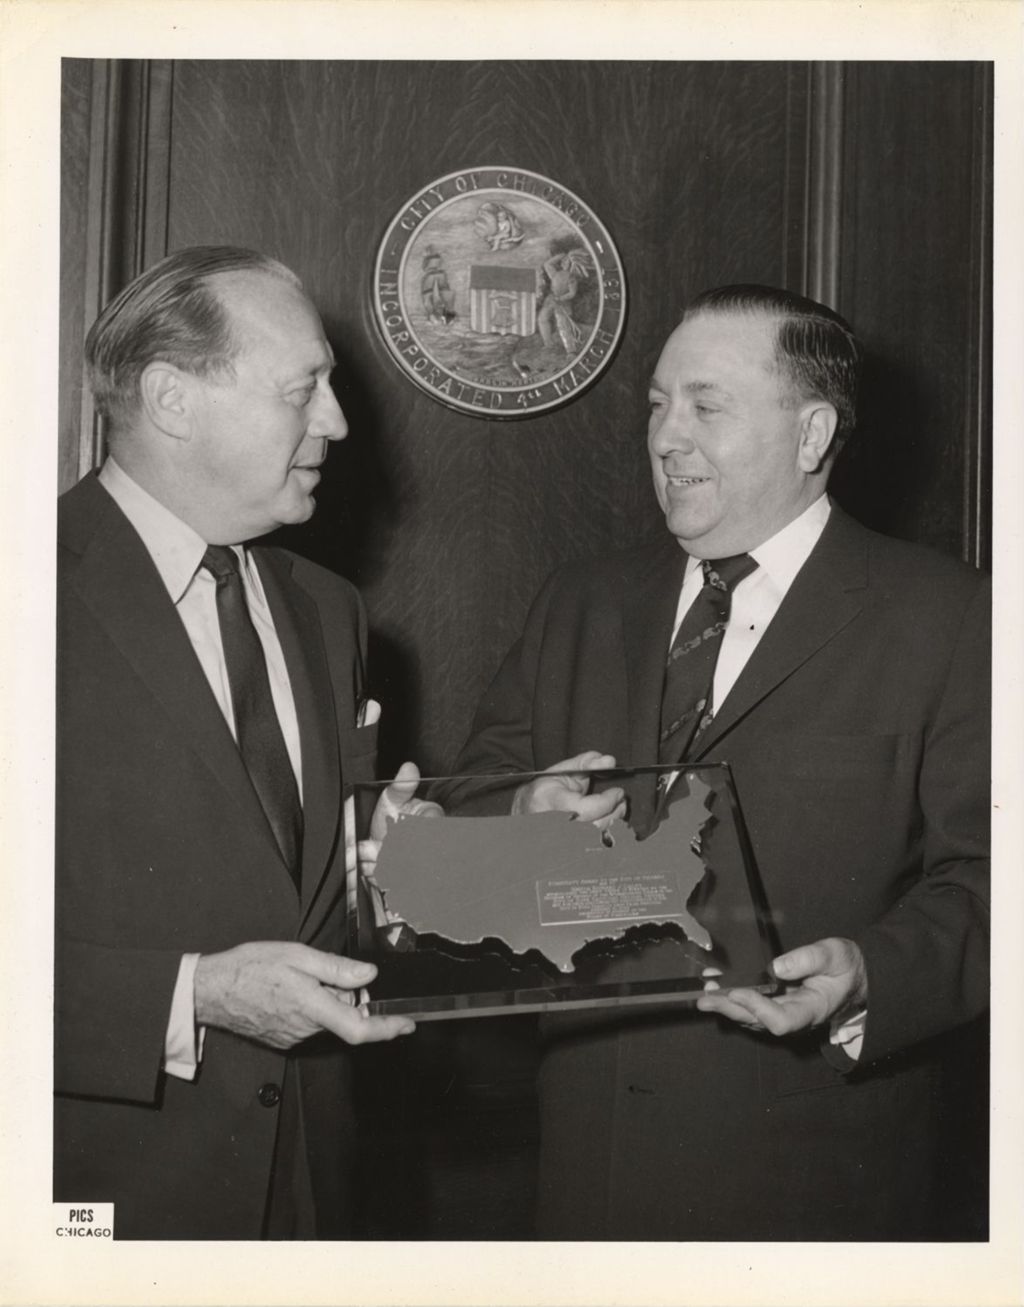 Richard J. Daley accepts an award plaque